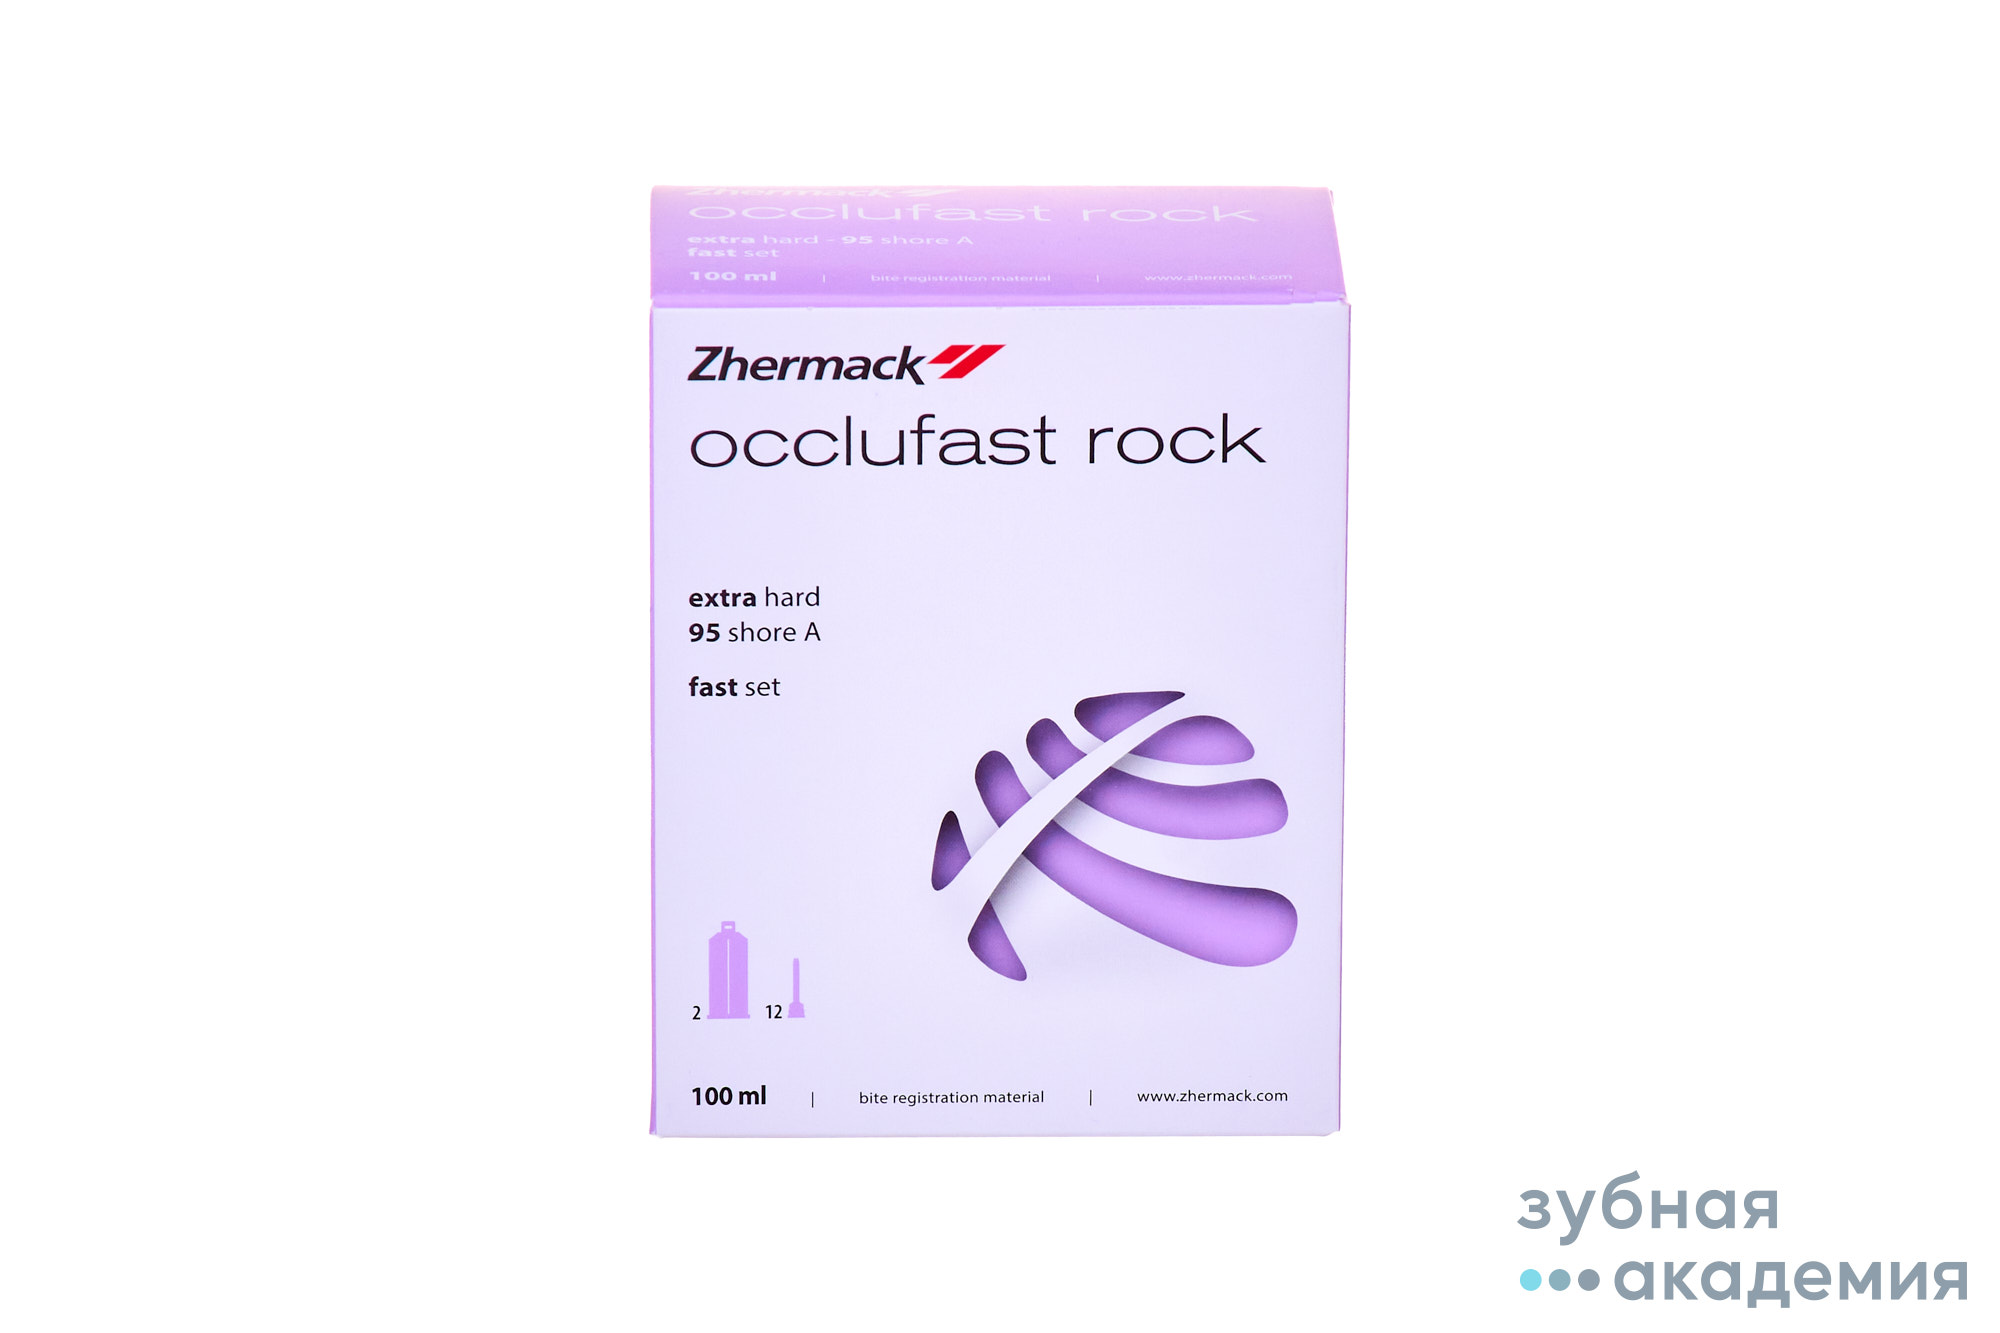 Occlufast Rock/Окклюфаст Рок - А-Силикон для регистрации прикуса упаковка 2х50мл/Zhermack/ Италия